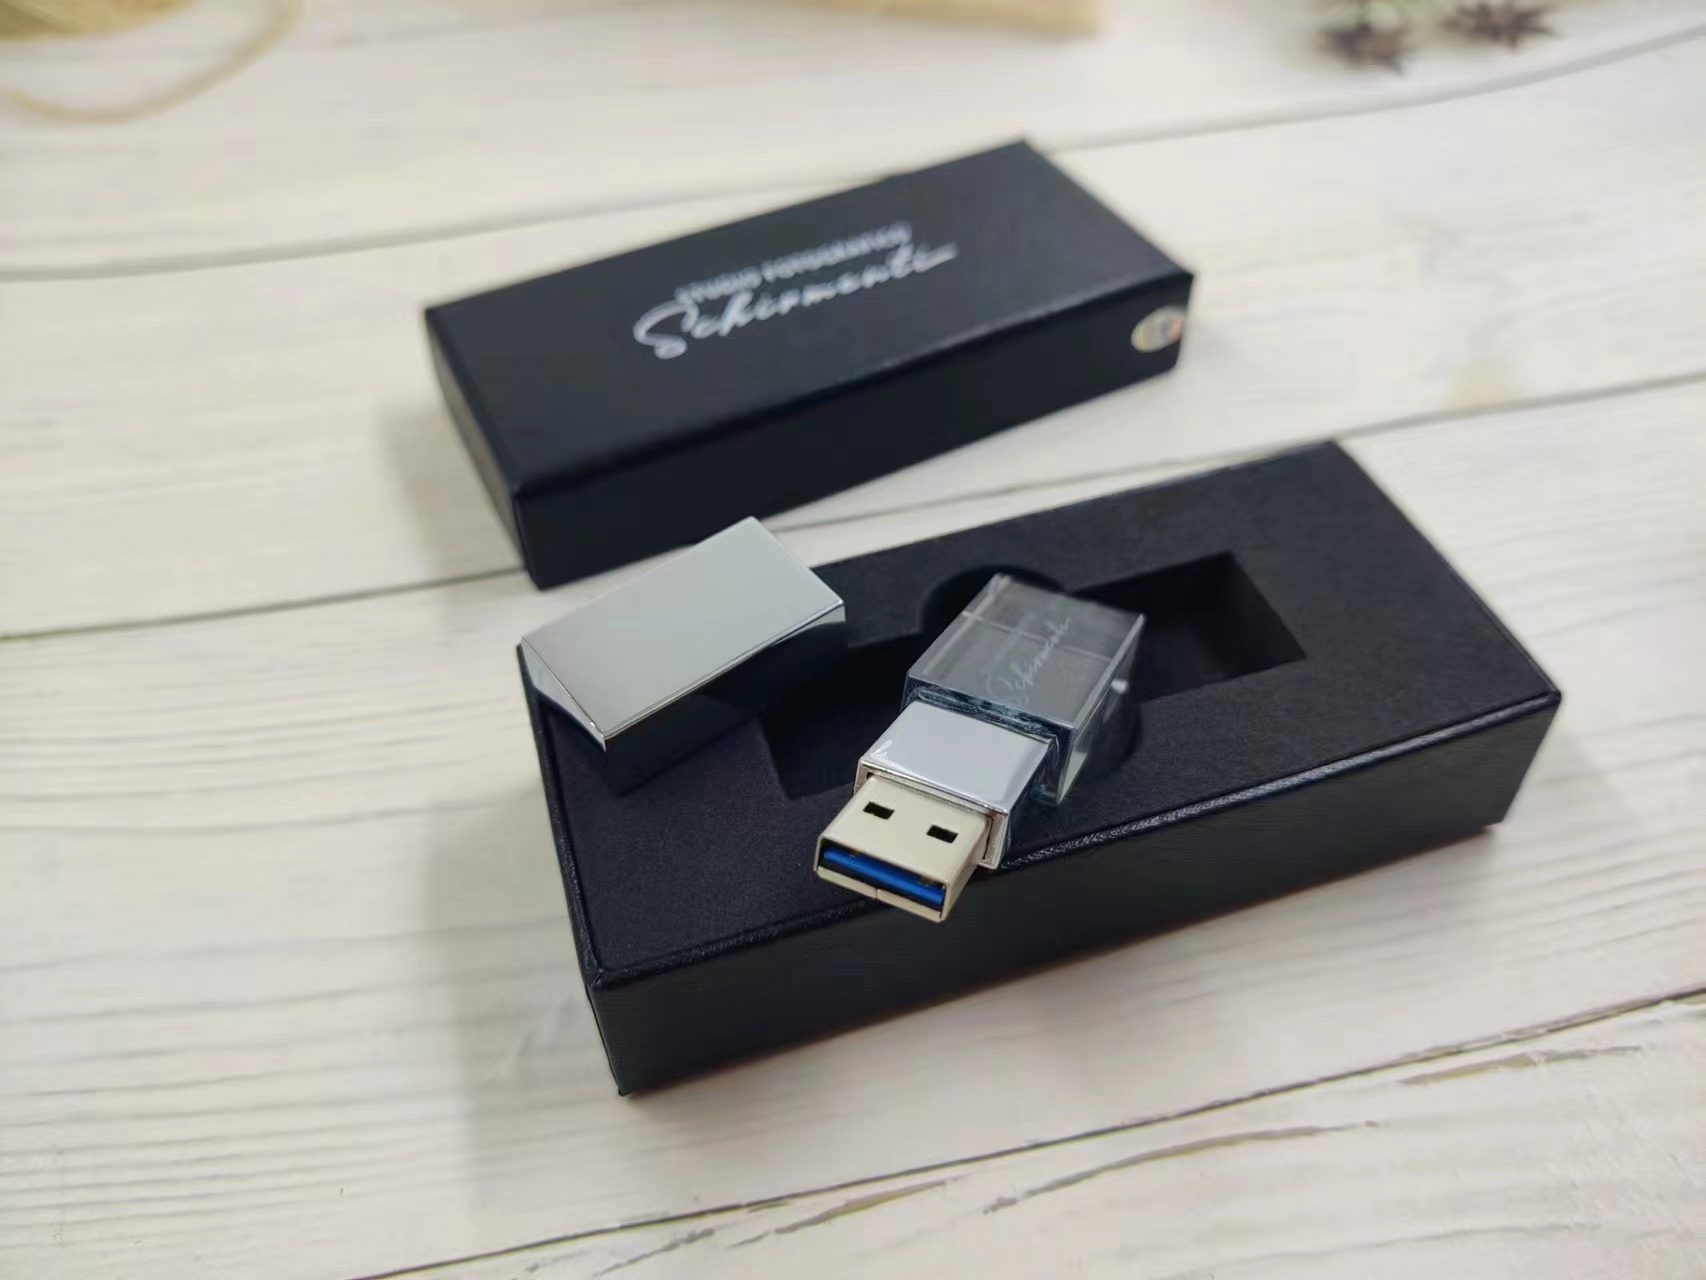 Crystal USB sticks 3.0 16GB with custom gift box 